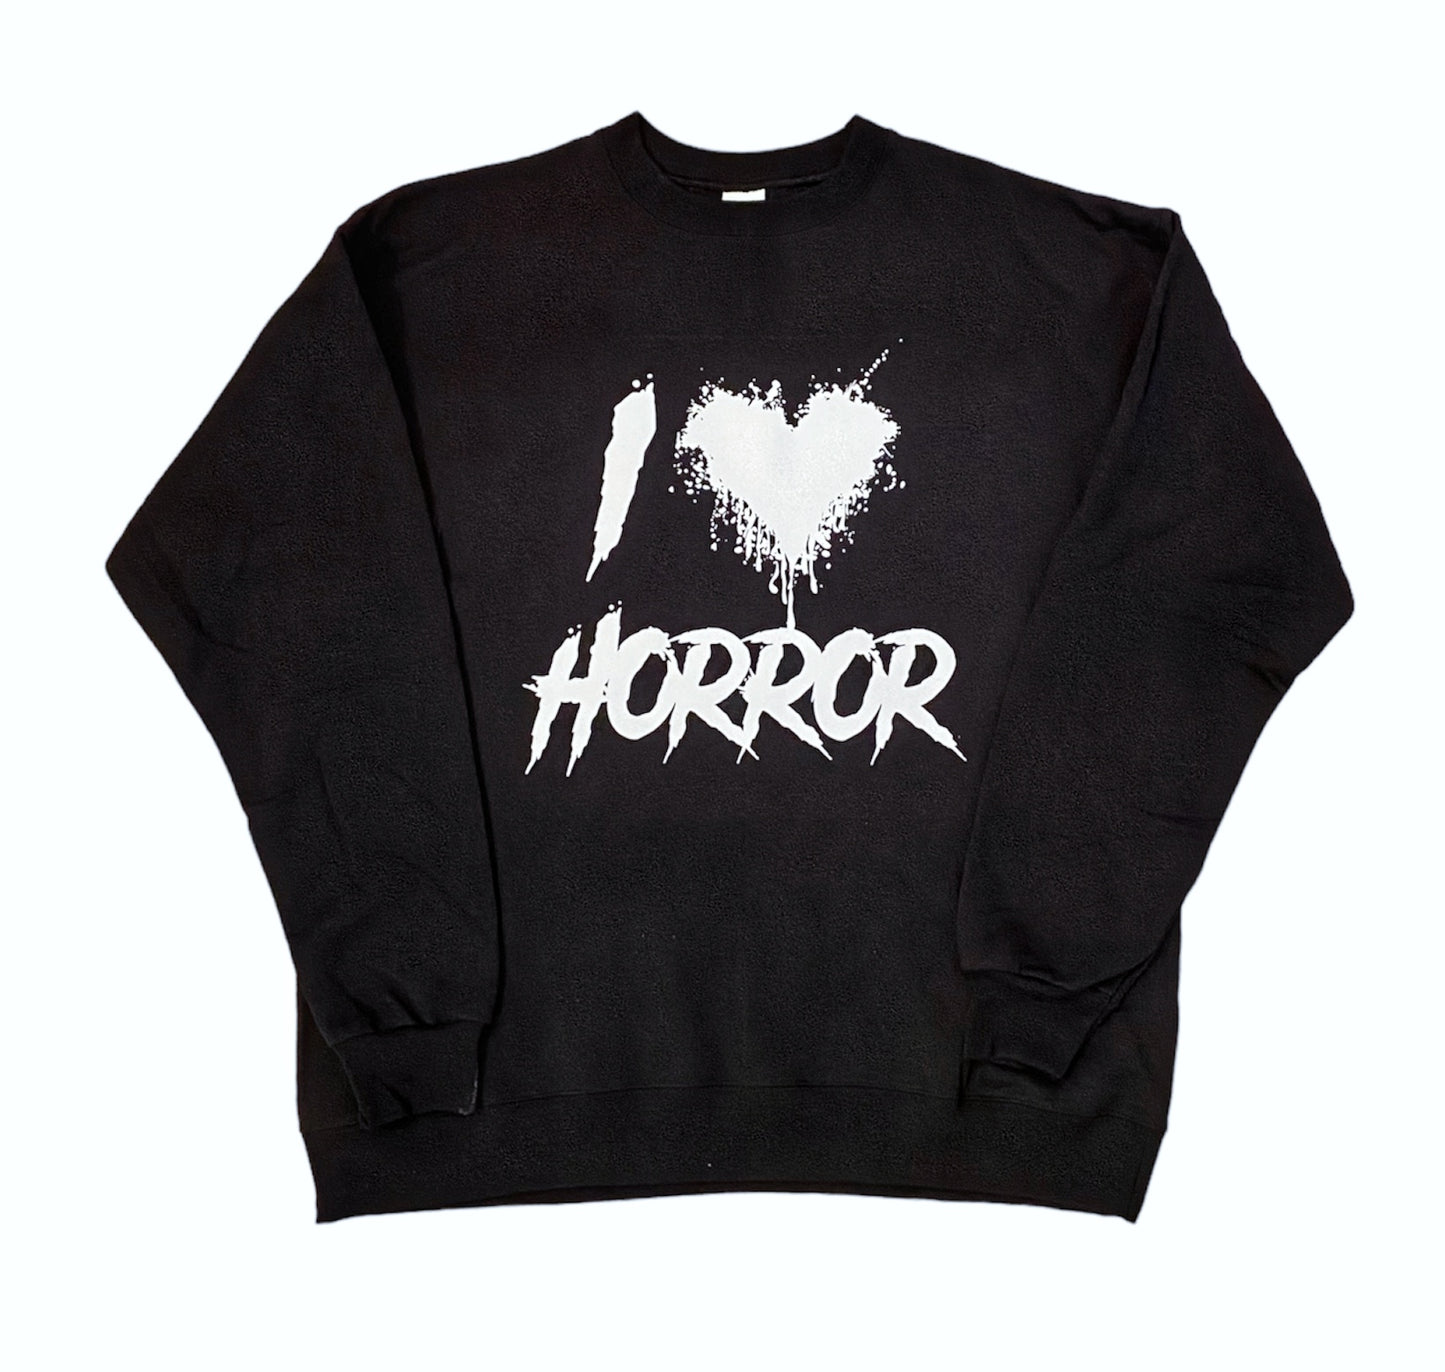 I love horror sweatshirt